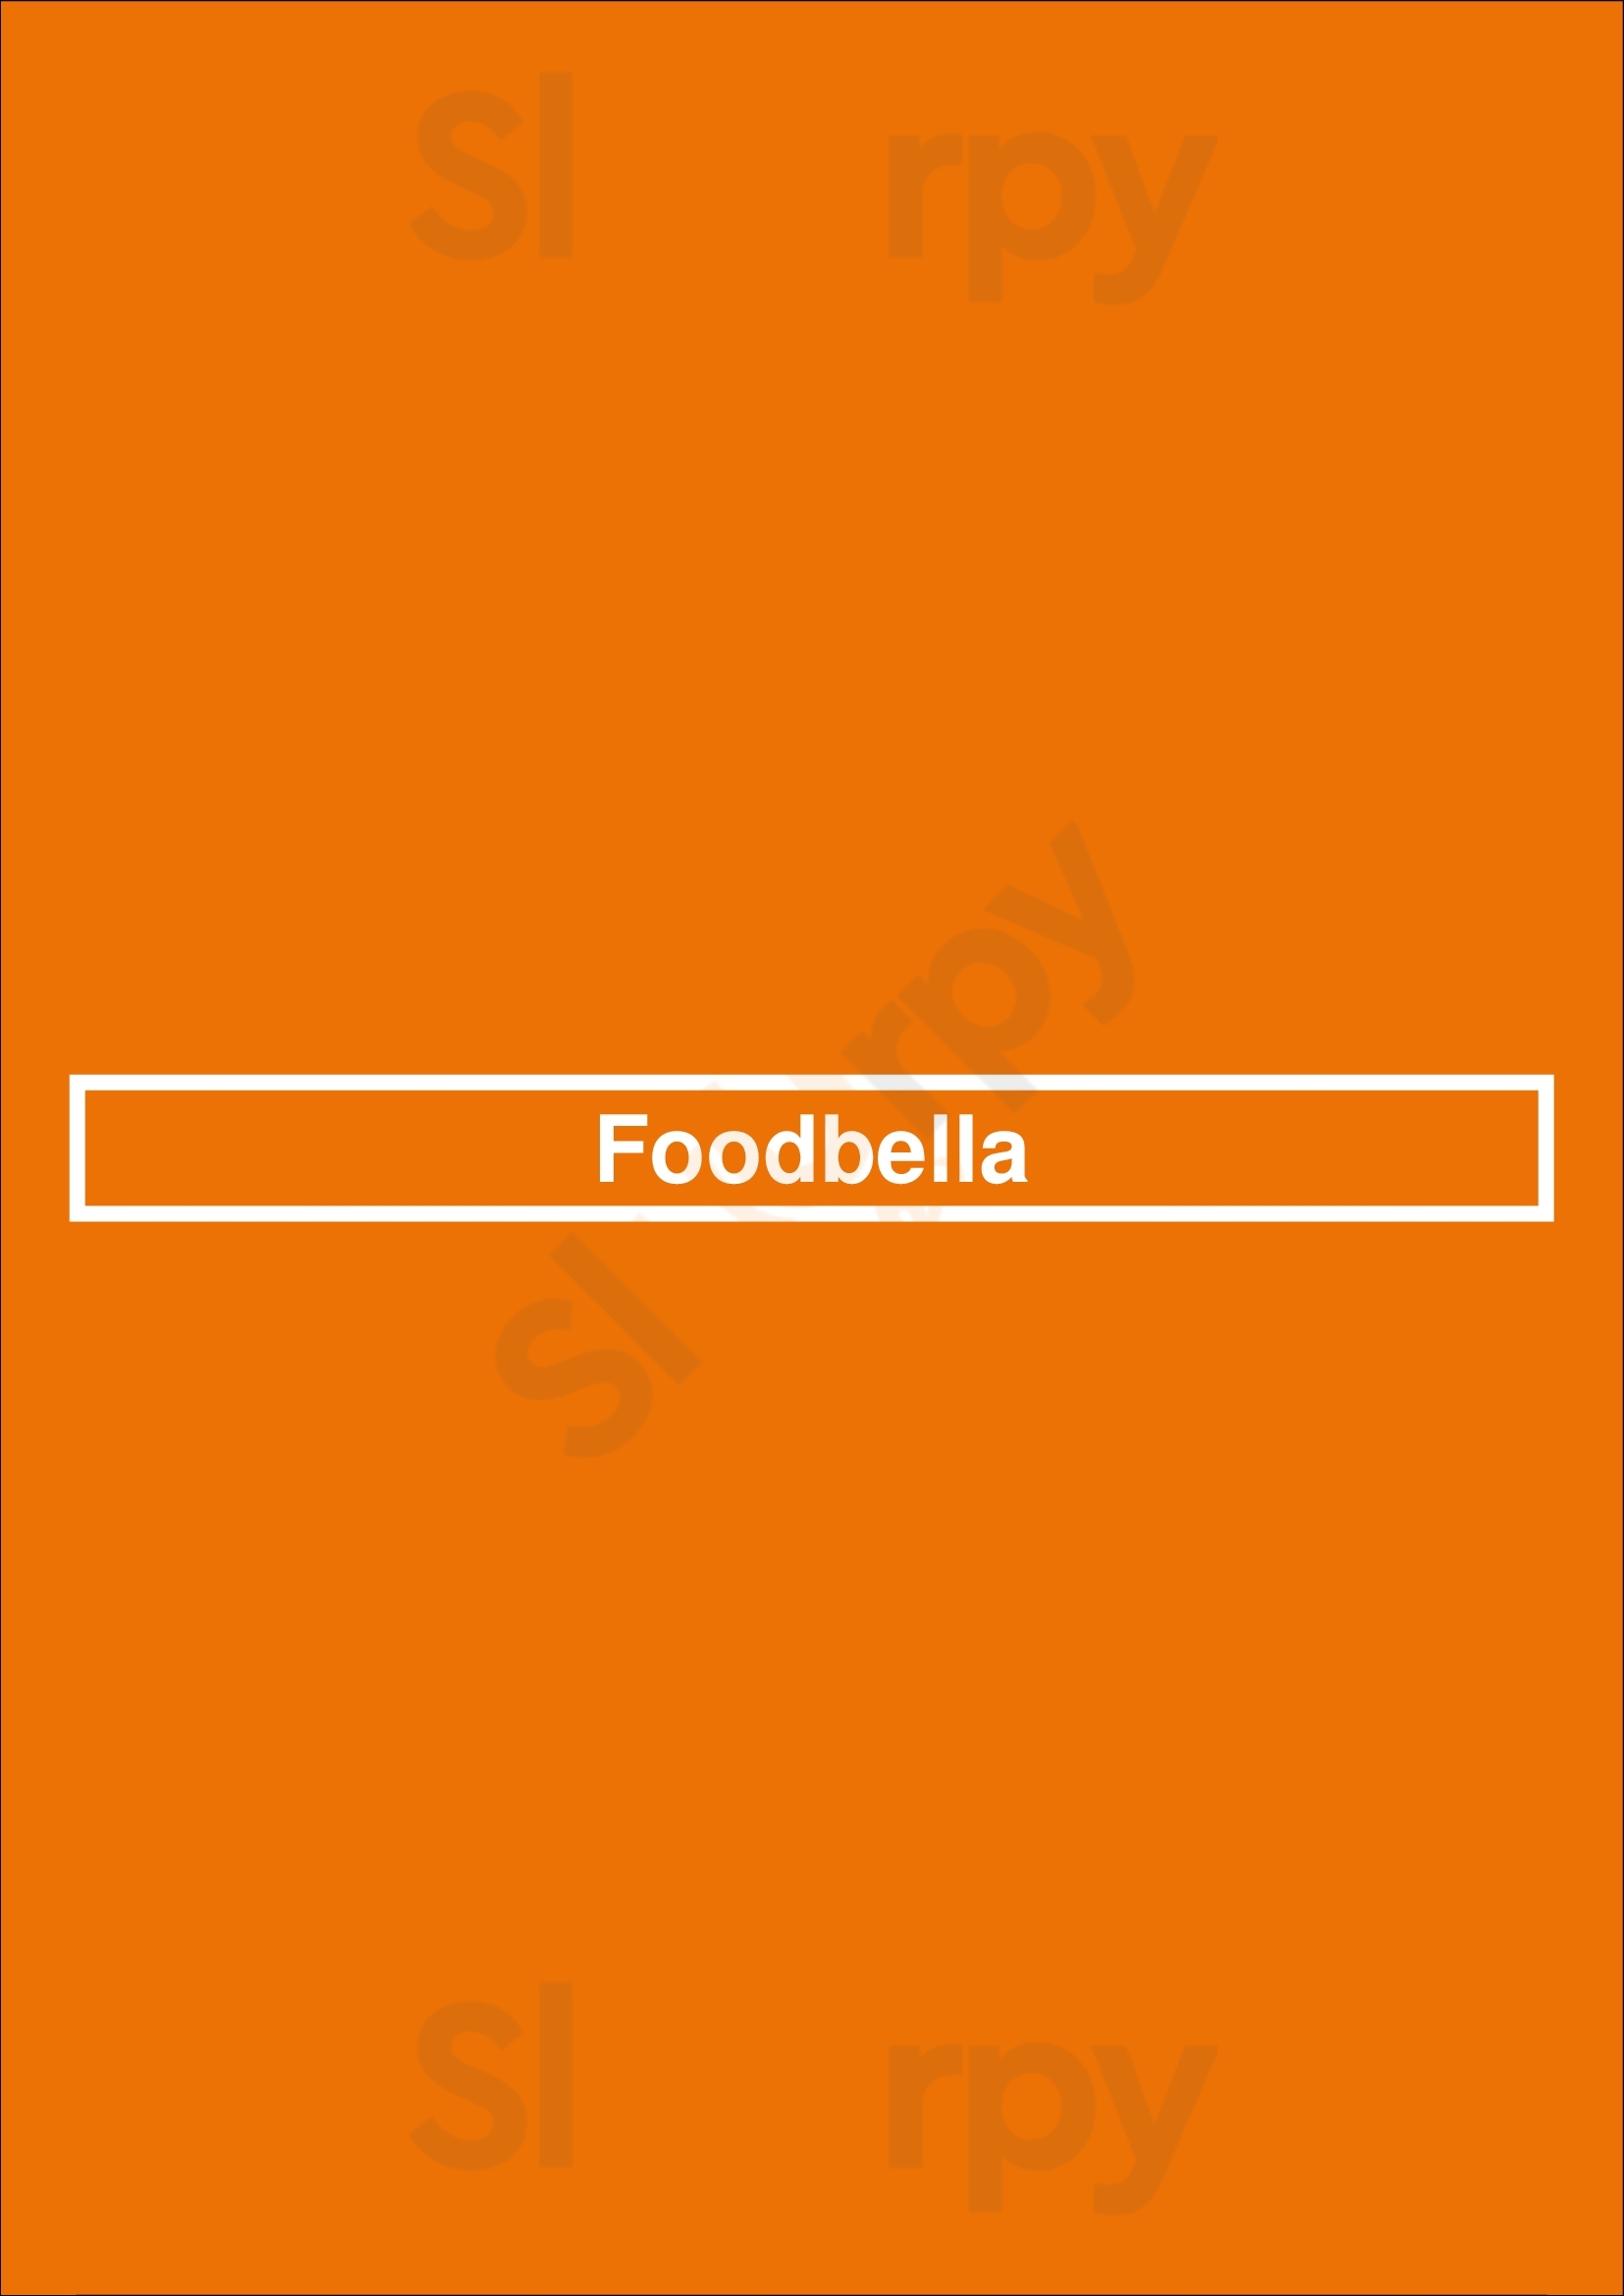 Foodbella New York City Menu - 1